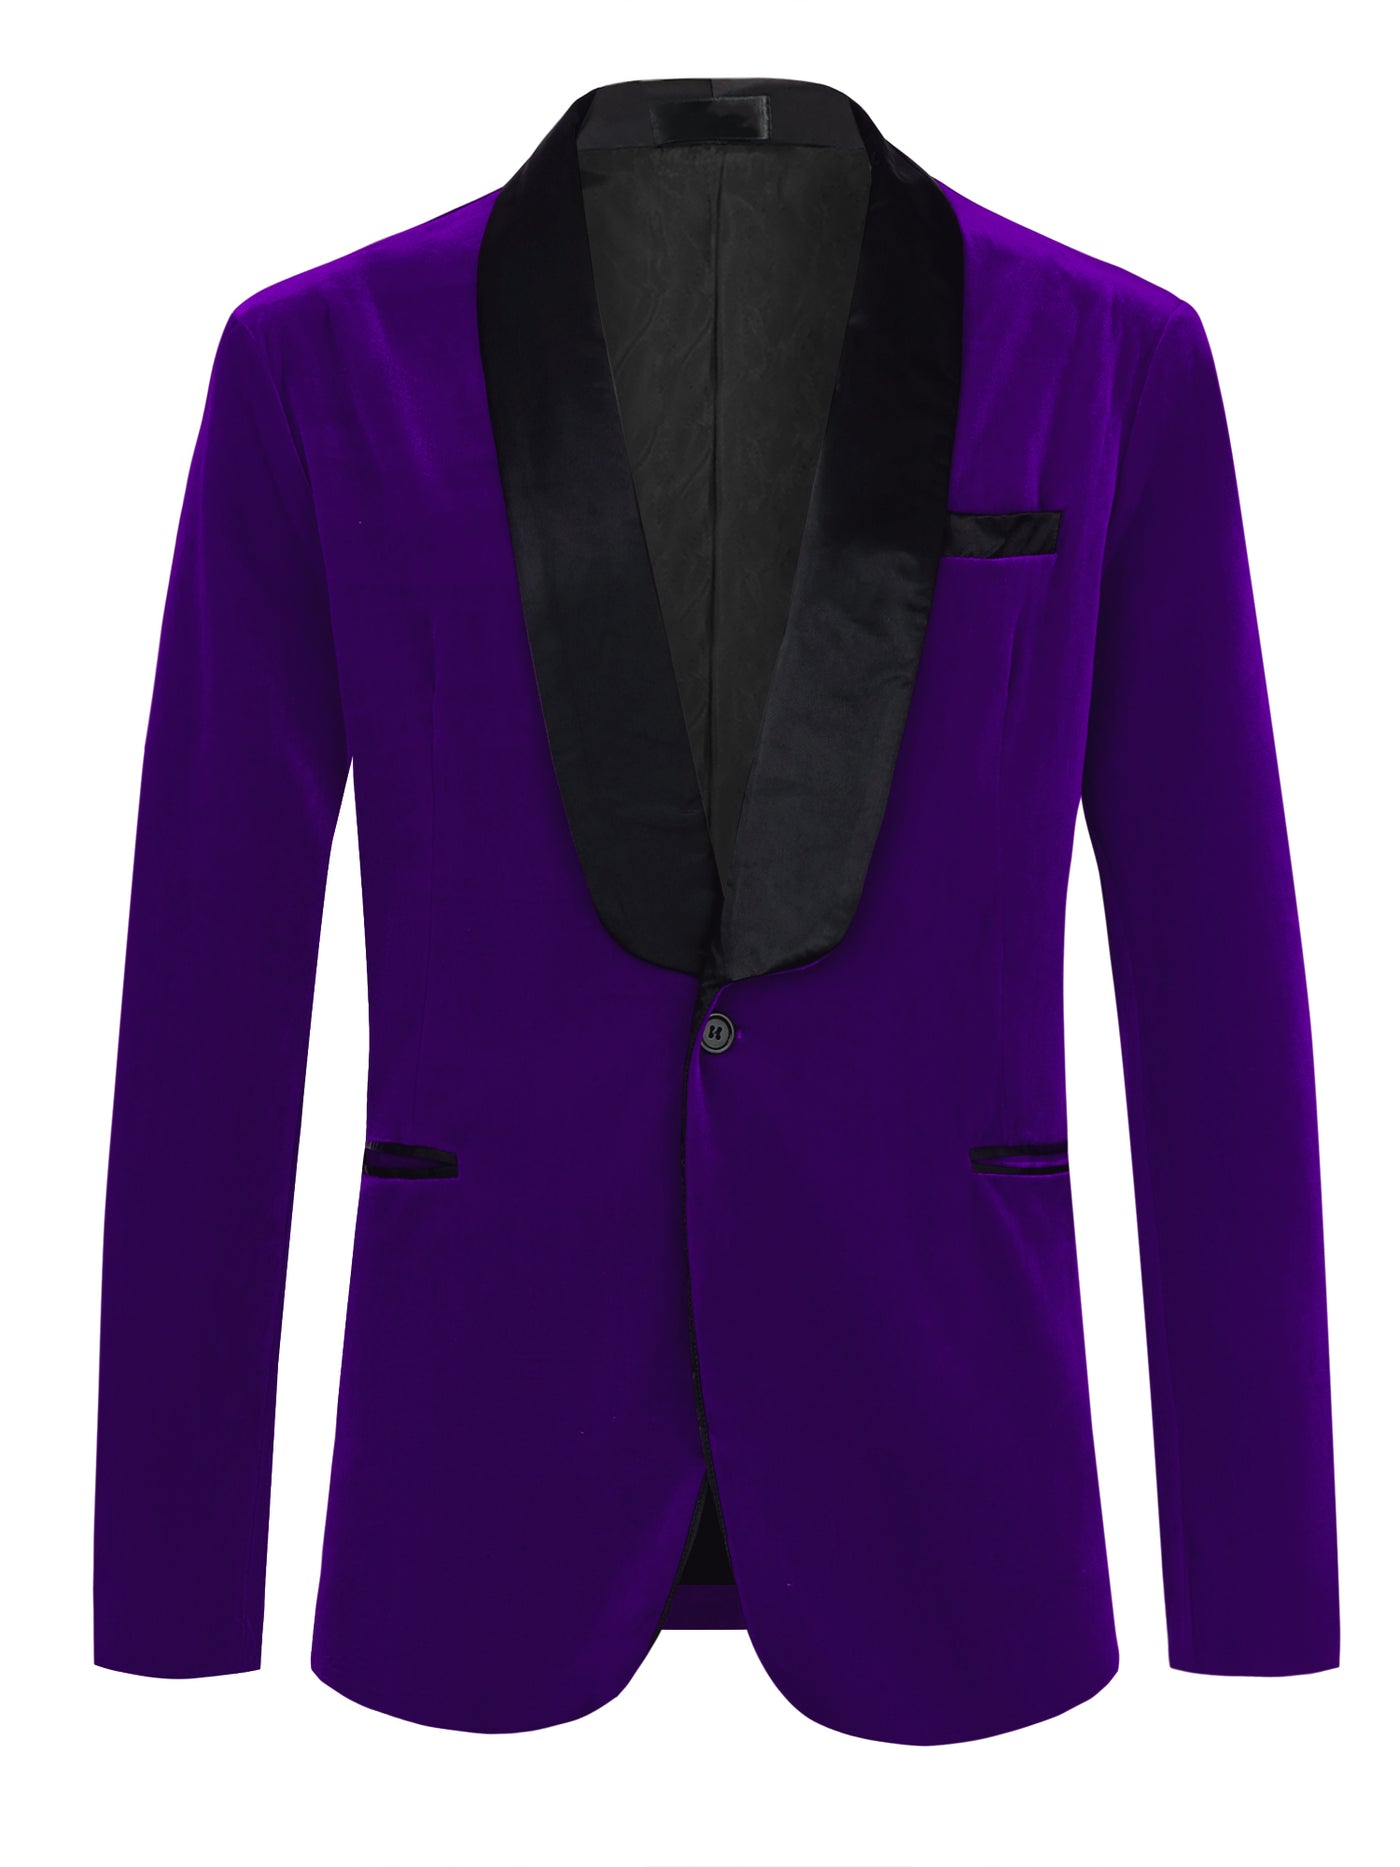 Bublédon Velvet Tuxedo Blazers for Men's Shawl Lapel Business Wedding Sports Coats